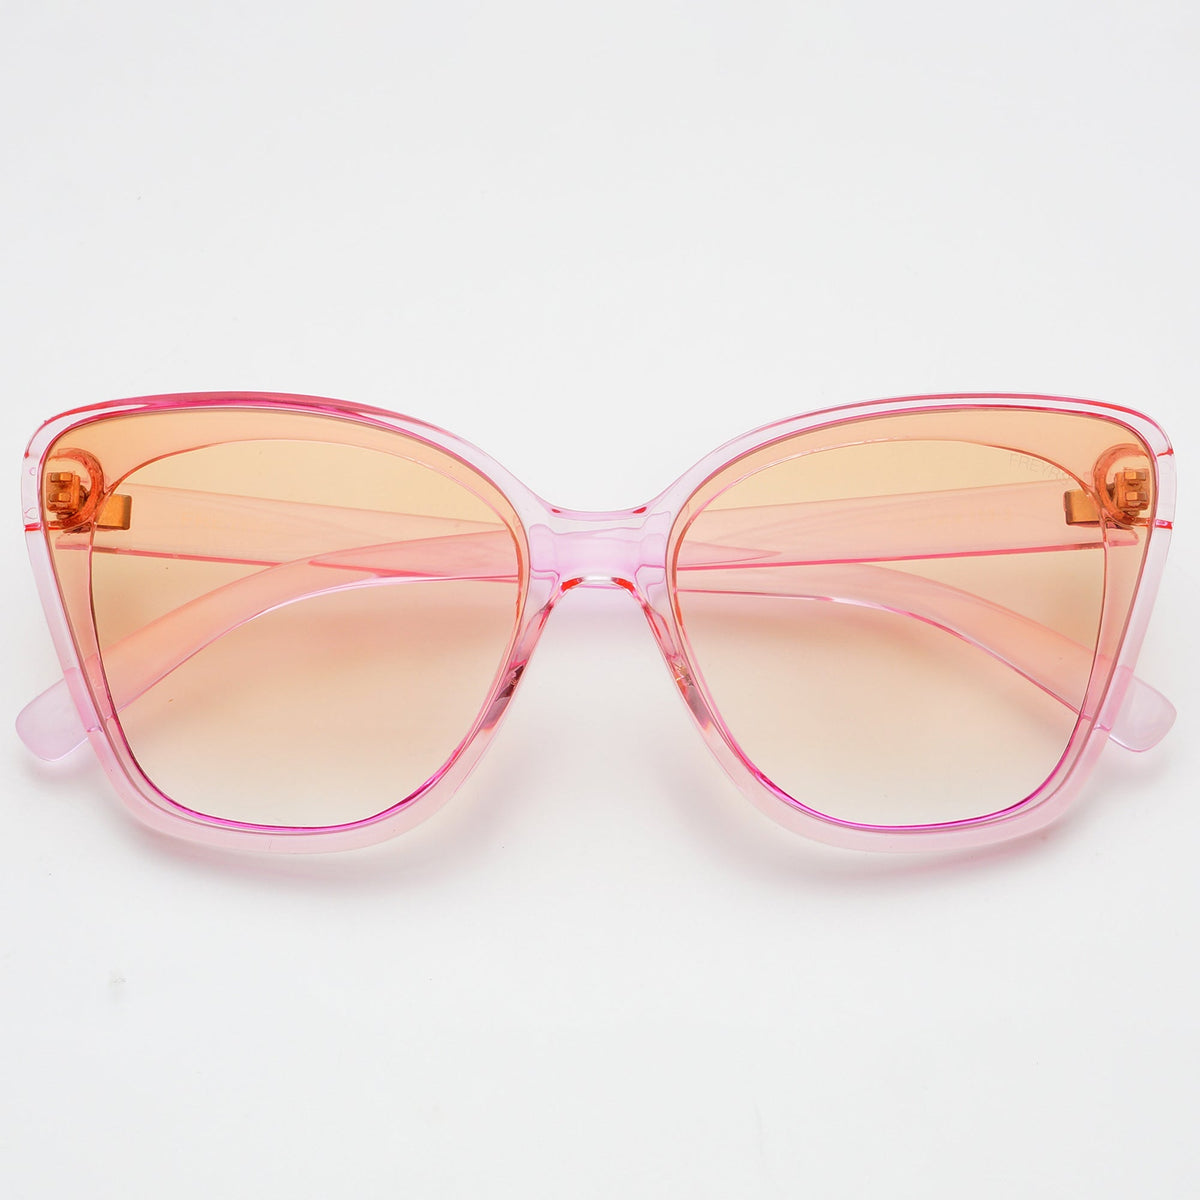 Freyrs Premium Grace Pink Sunglasses - Pink